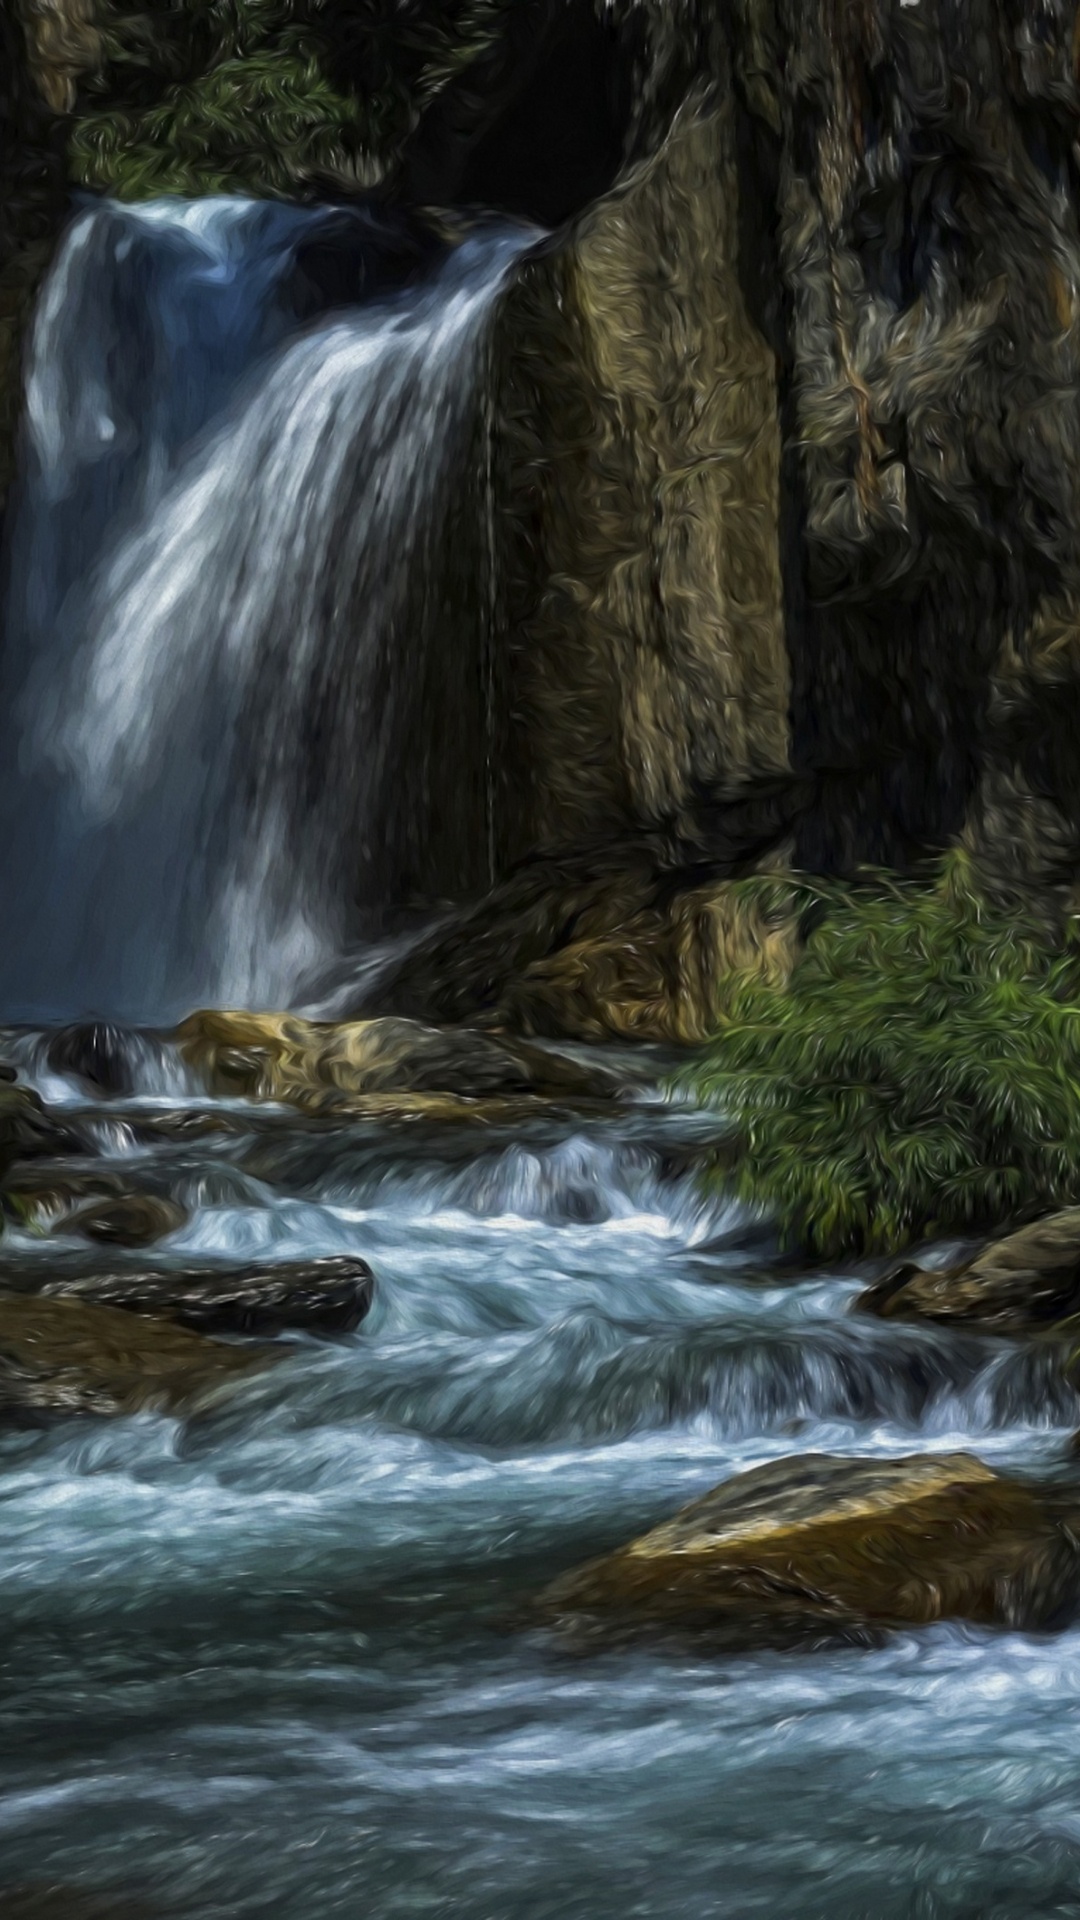 Water Falls on Rocky Mountain. Wallpaper in 1080x1920 Resolution